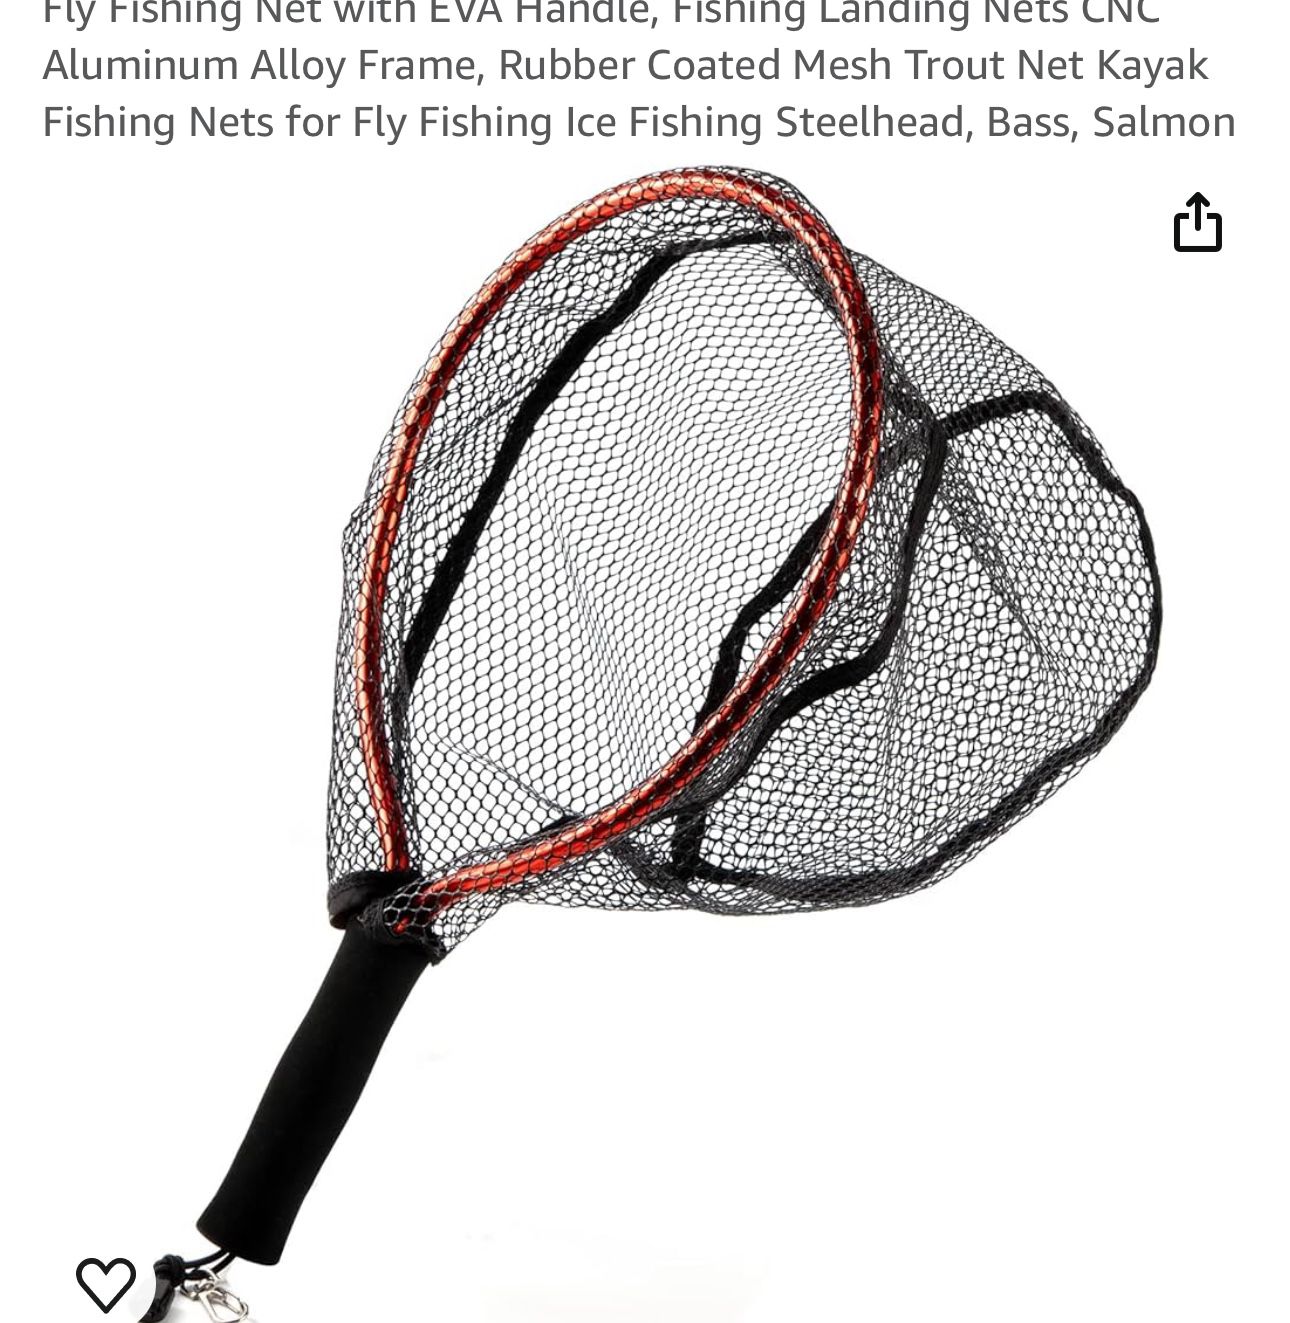 Fishing Accessories- Fly Fishing Net Folding Dip Net Outdoor Fishing Rubber Non-Slip Aluminum Alloy Pole Handle Large Catching Fish Mesh,Fishing Landi